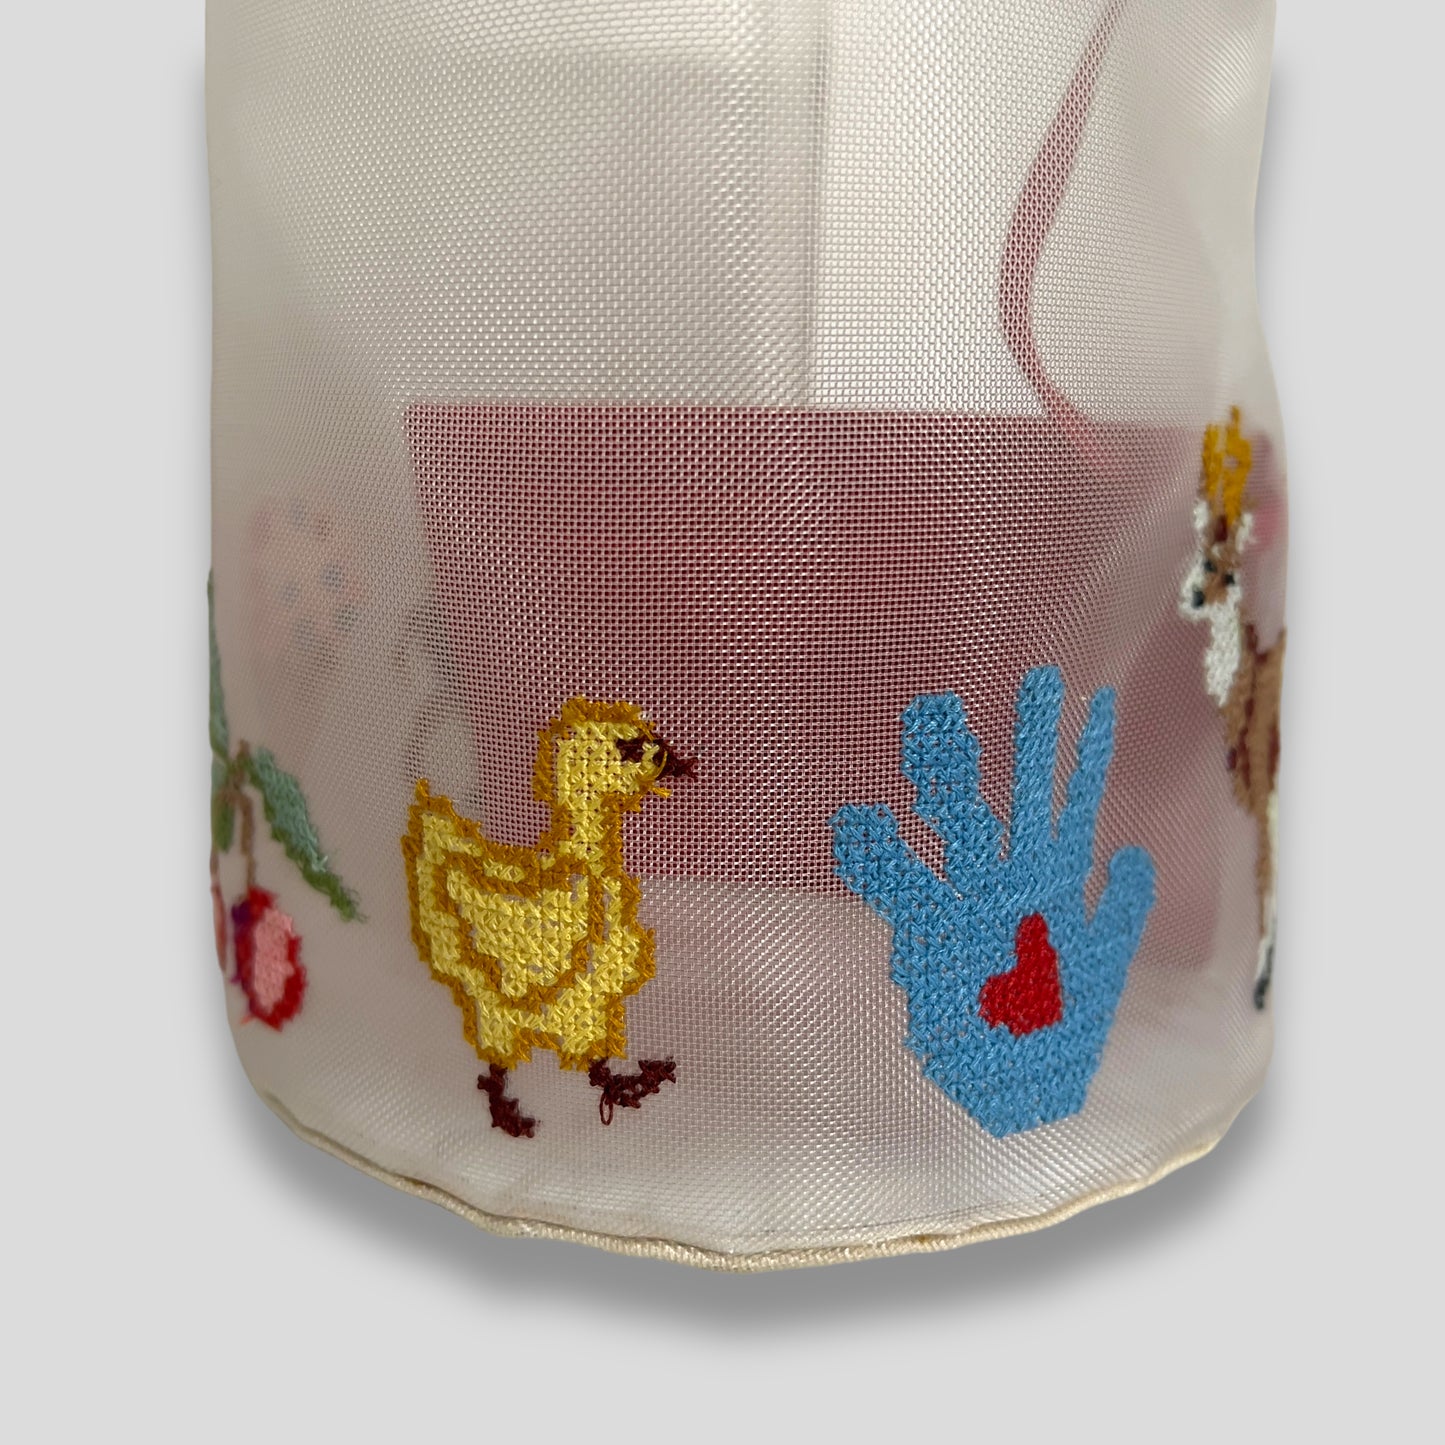 Miu Miu 1998 embroidery bag